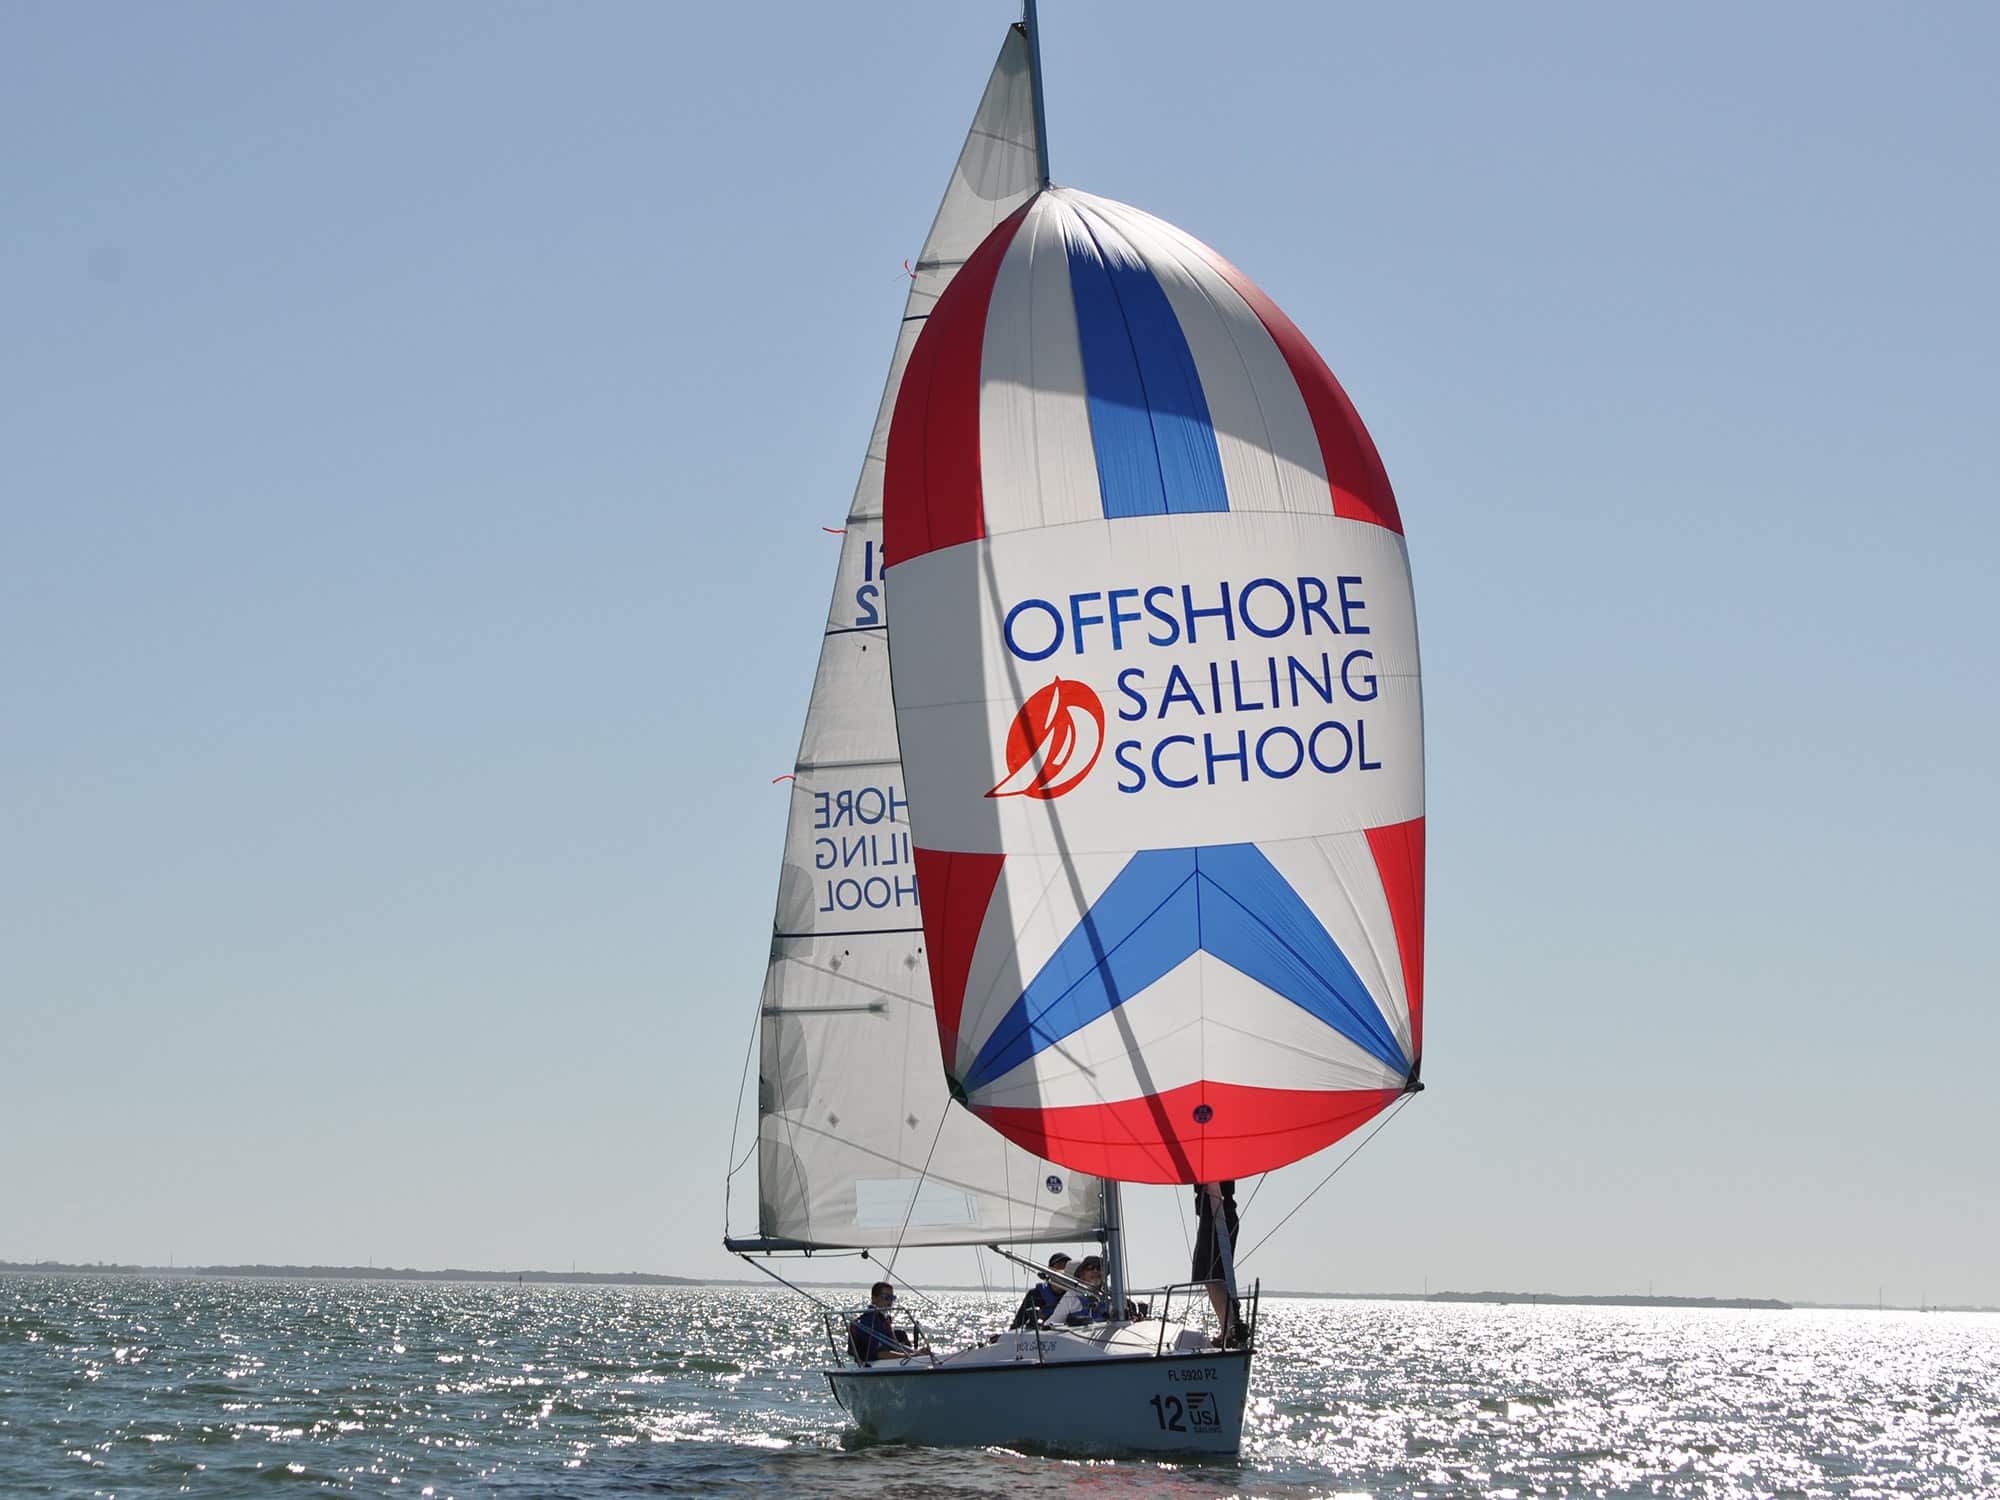 Offshore sailing school